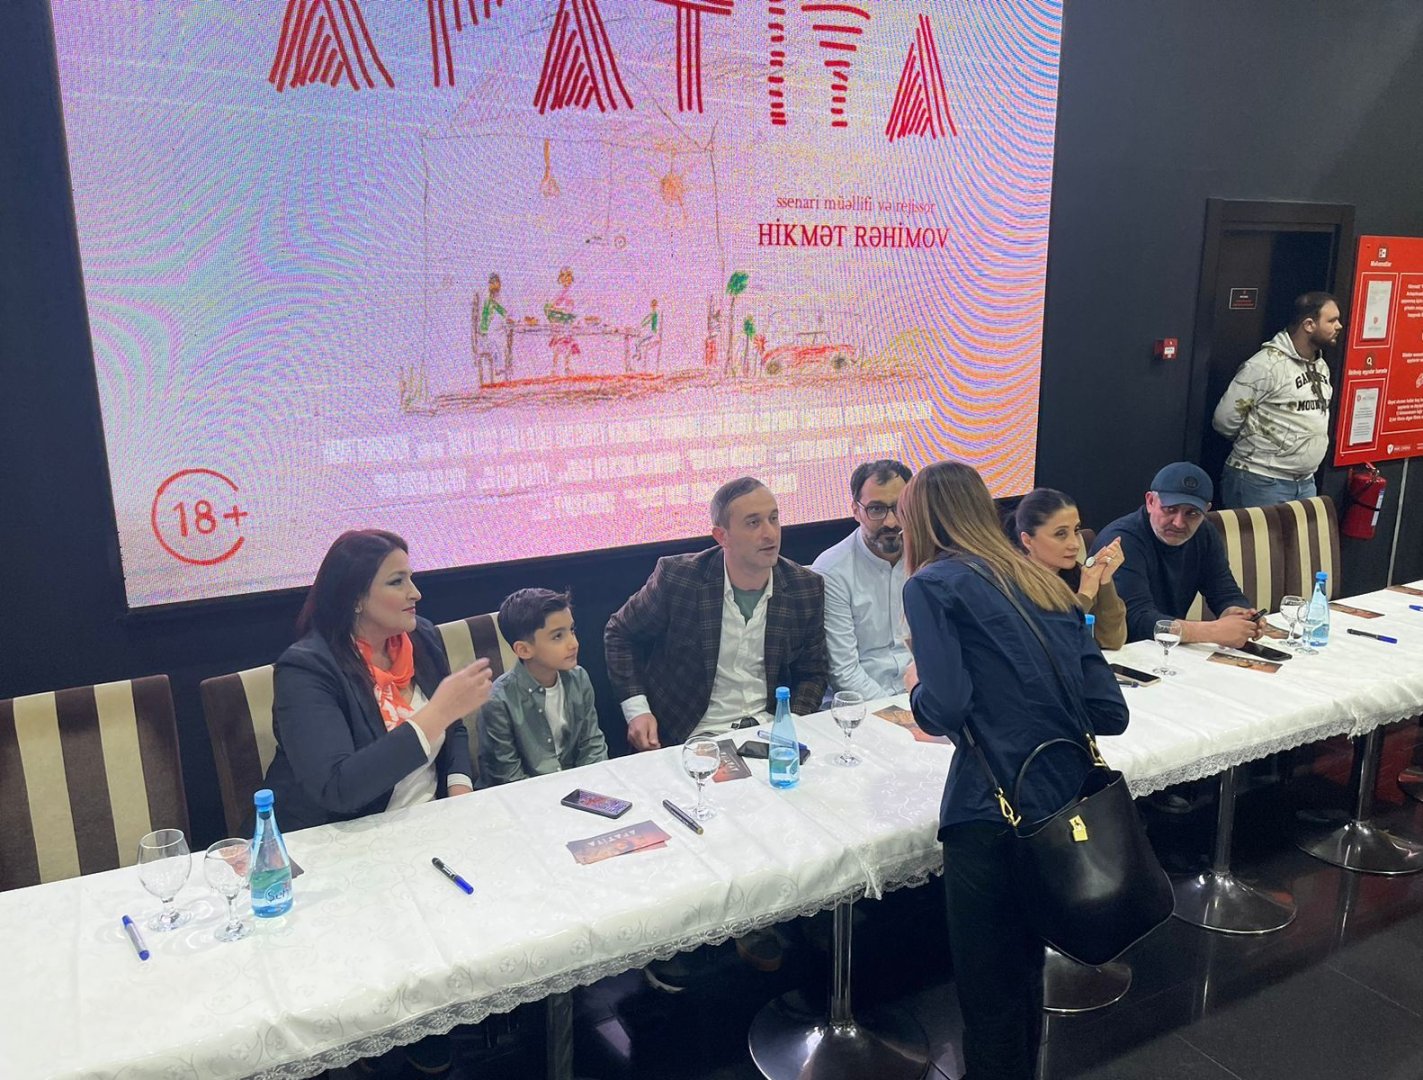 В Баку прошла автограф-сессия творческого коллектива фильма "Apatiya" (ФОТО)